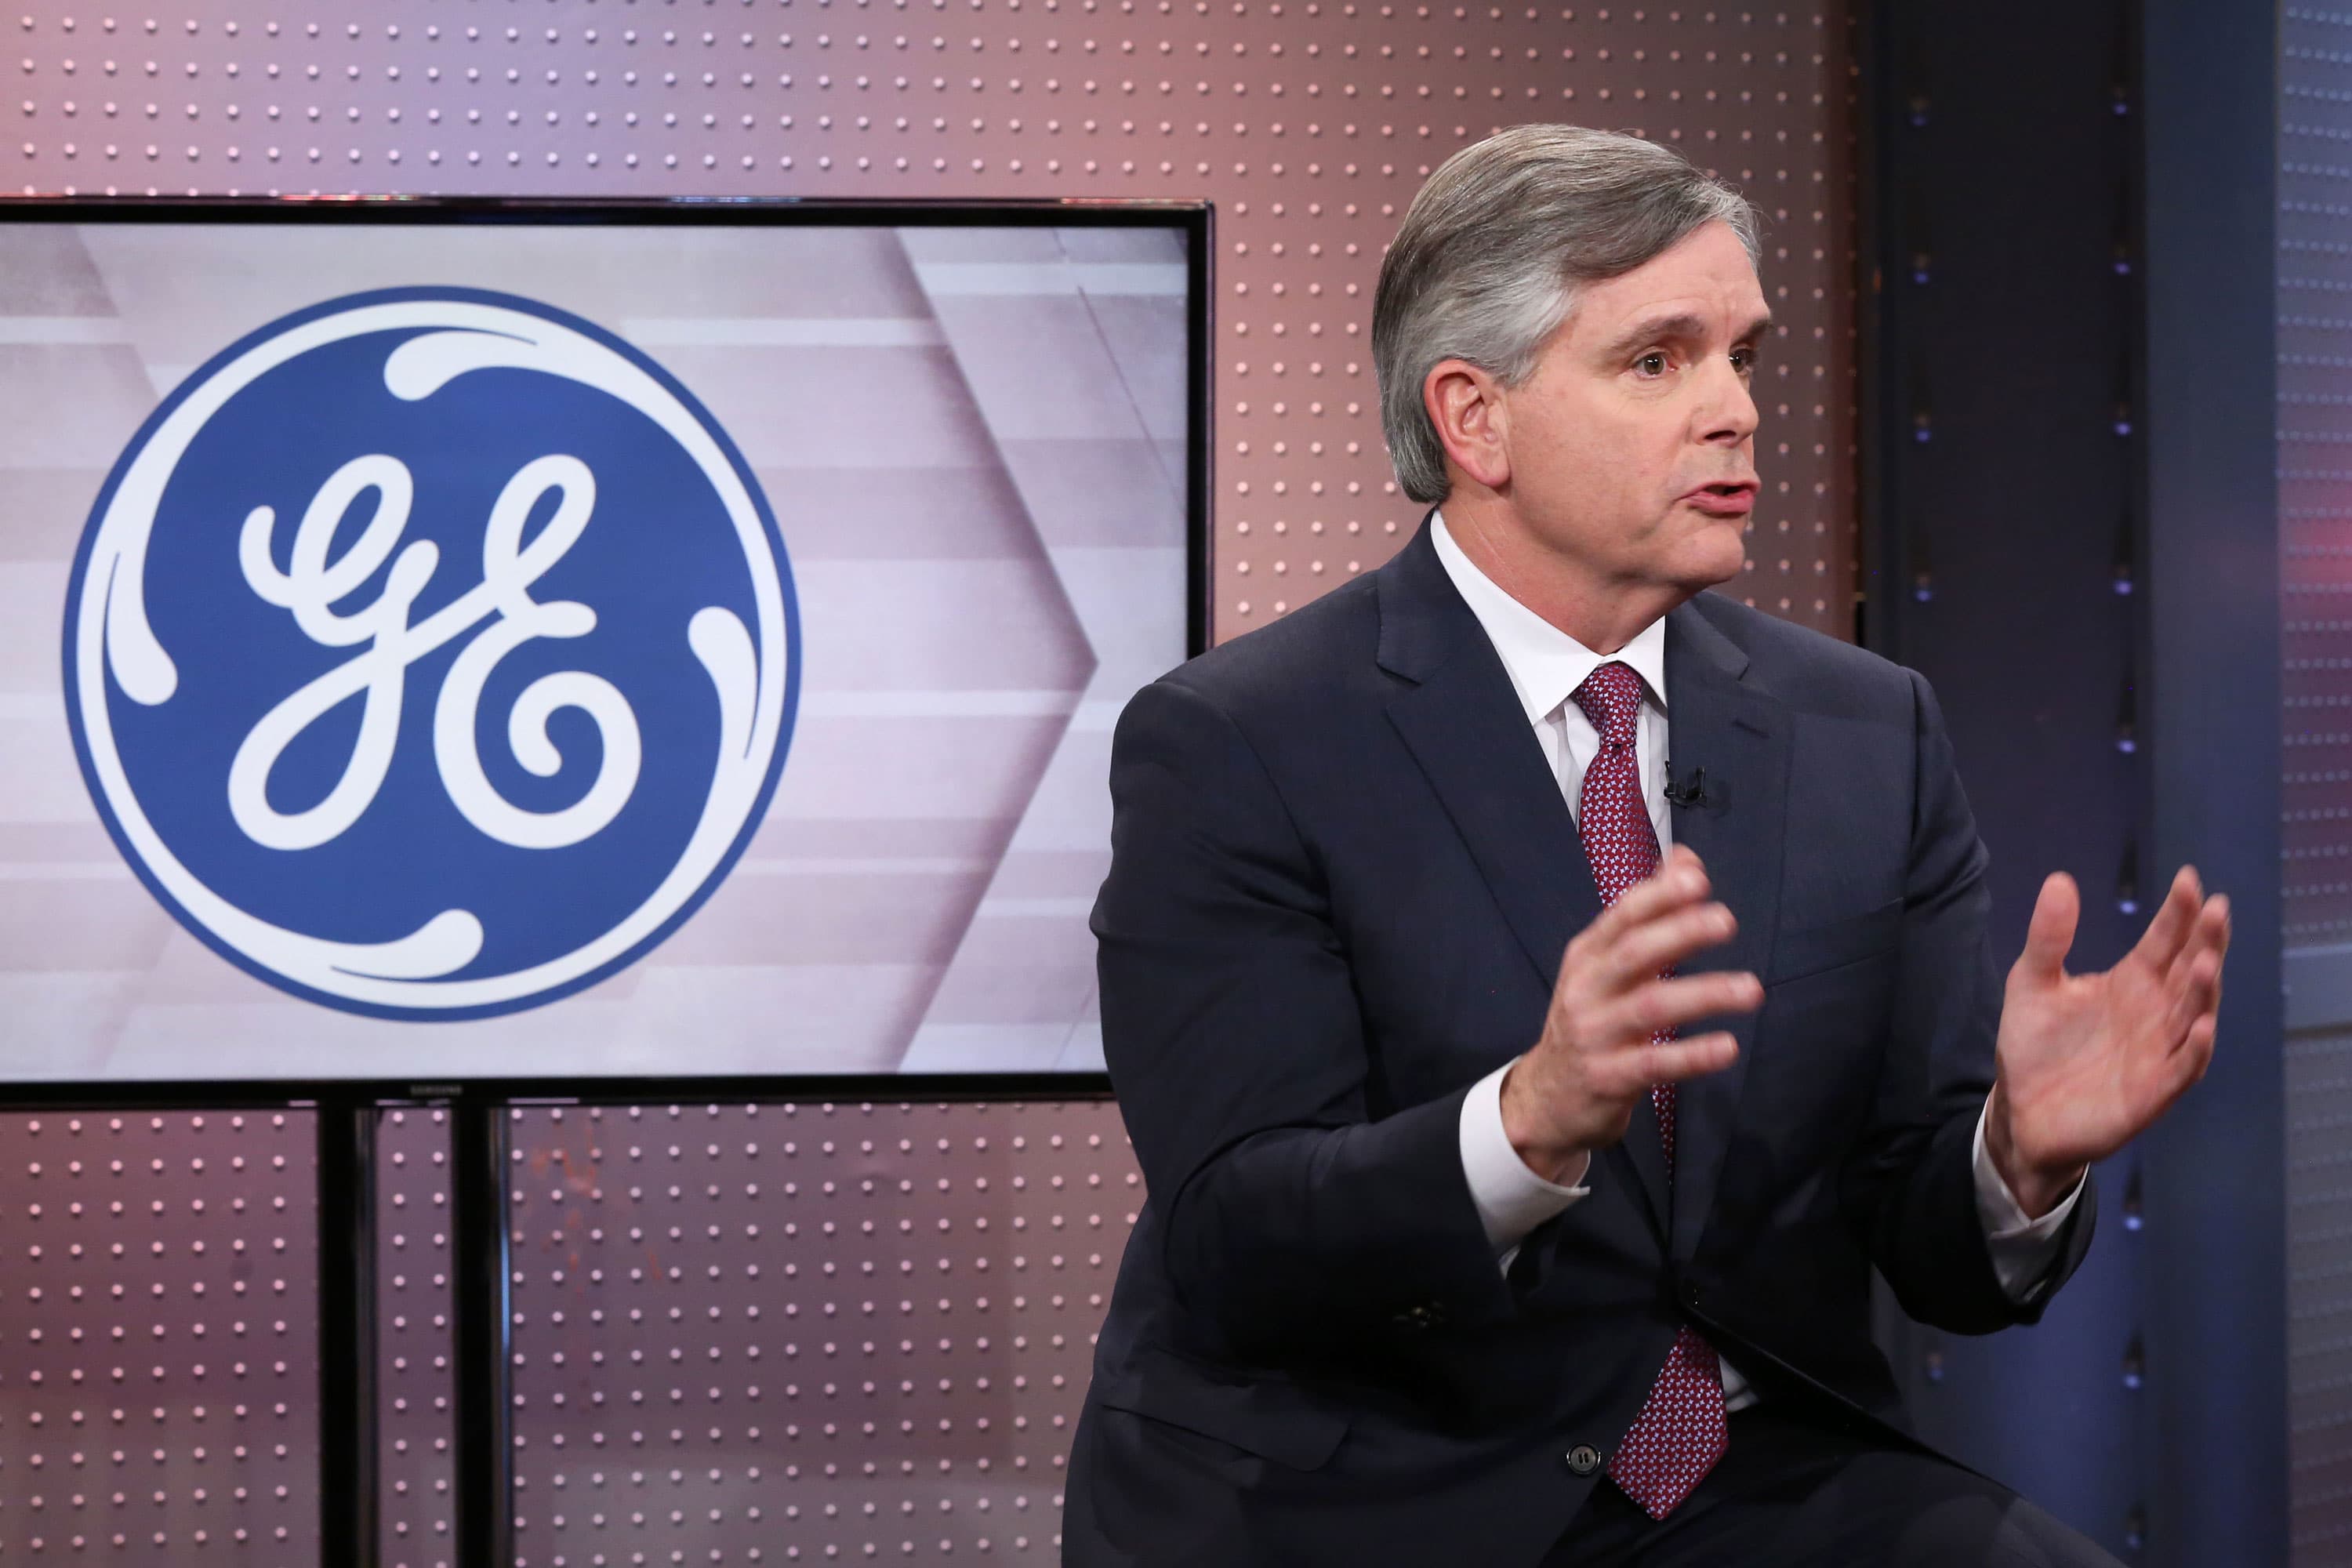 GE shares increase losses after Gecas sale, warns Tusa of JPMorgan about debt